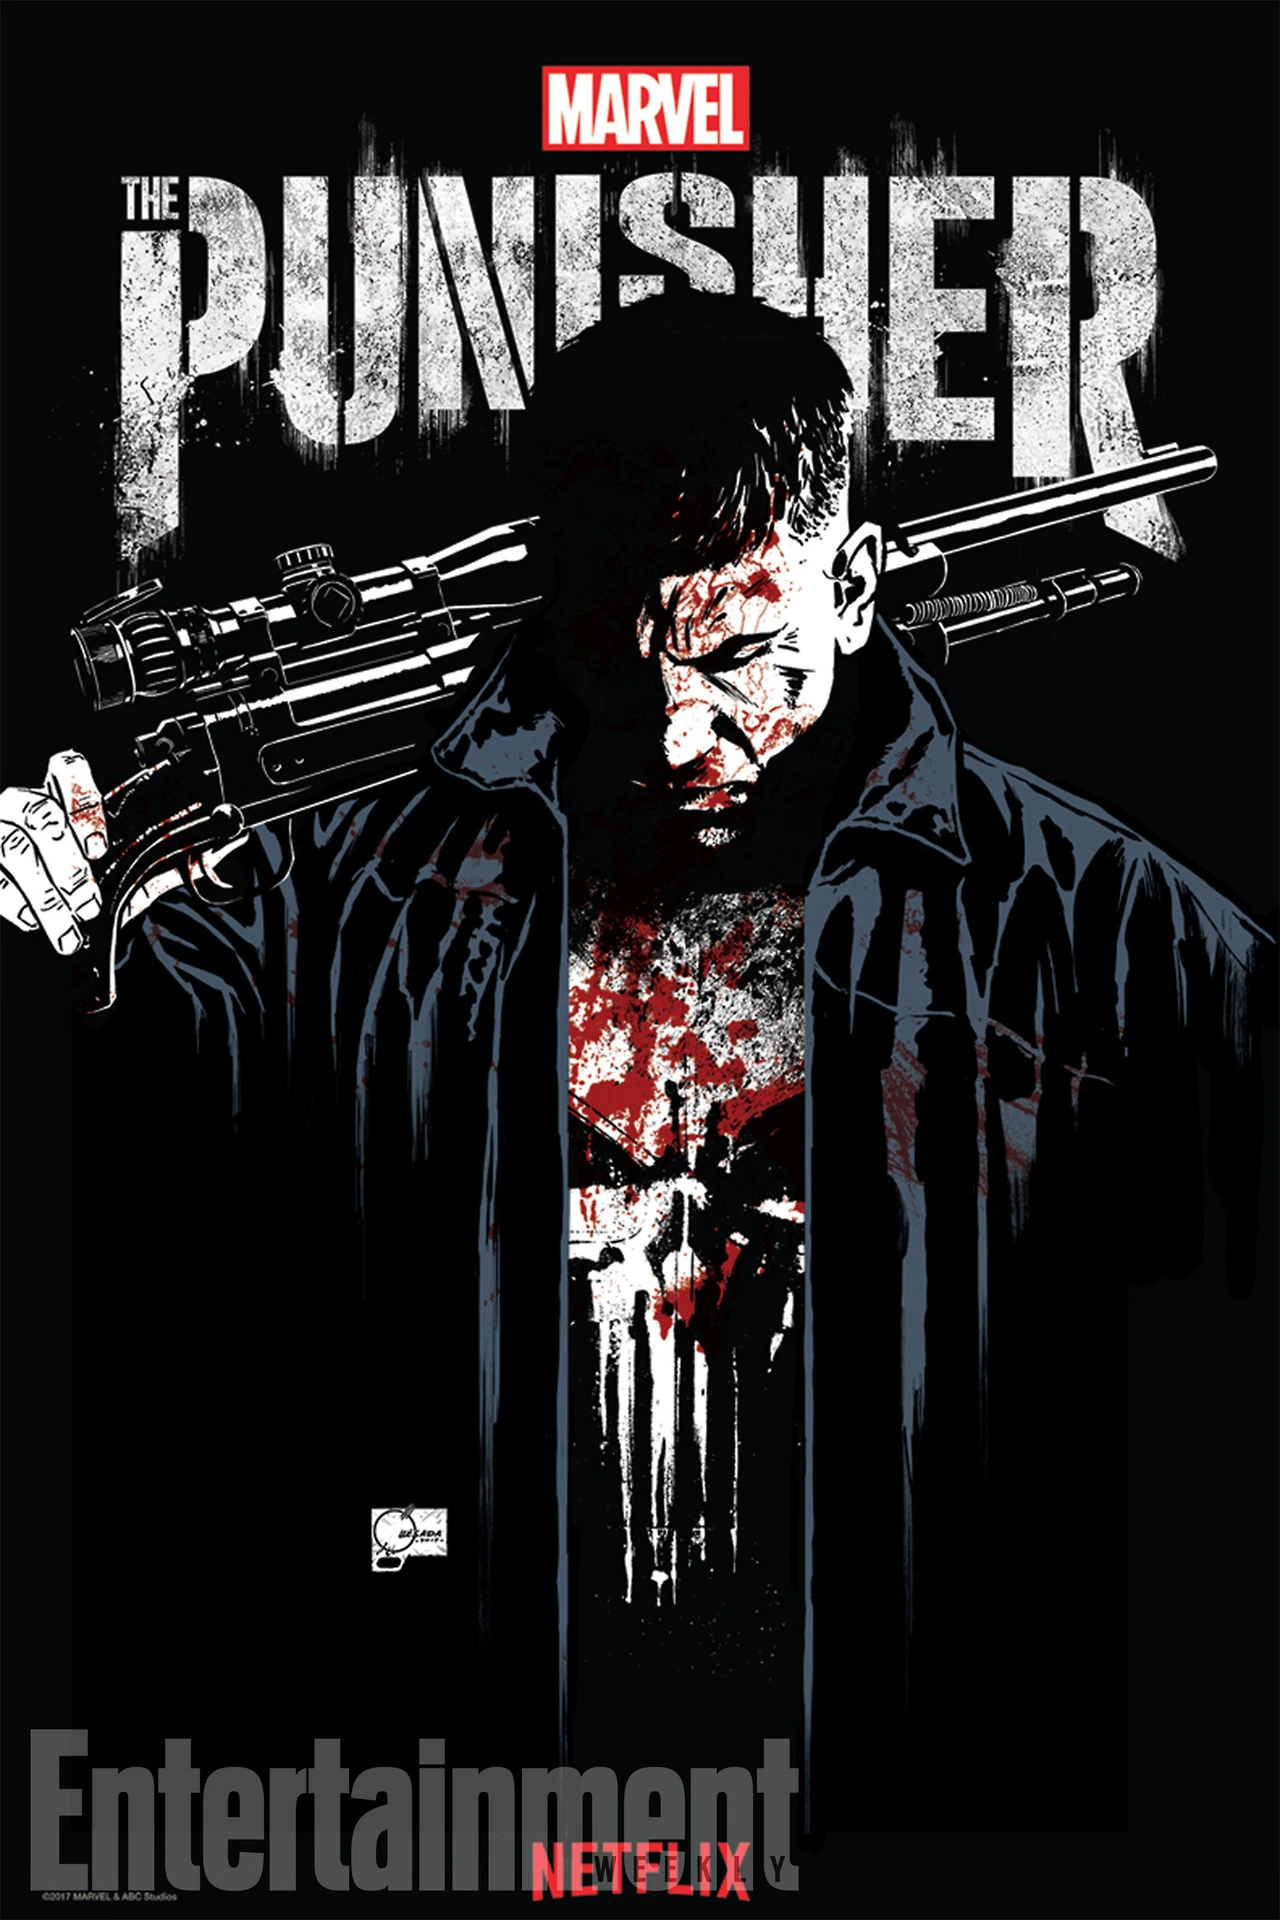 Jon Bernthal's The Punisher